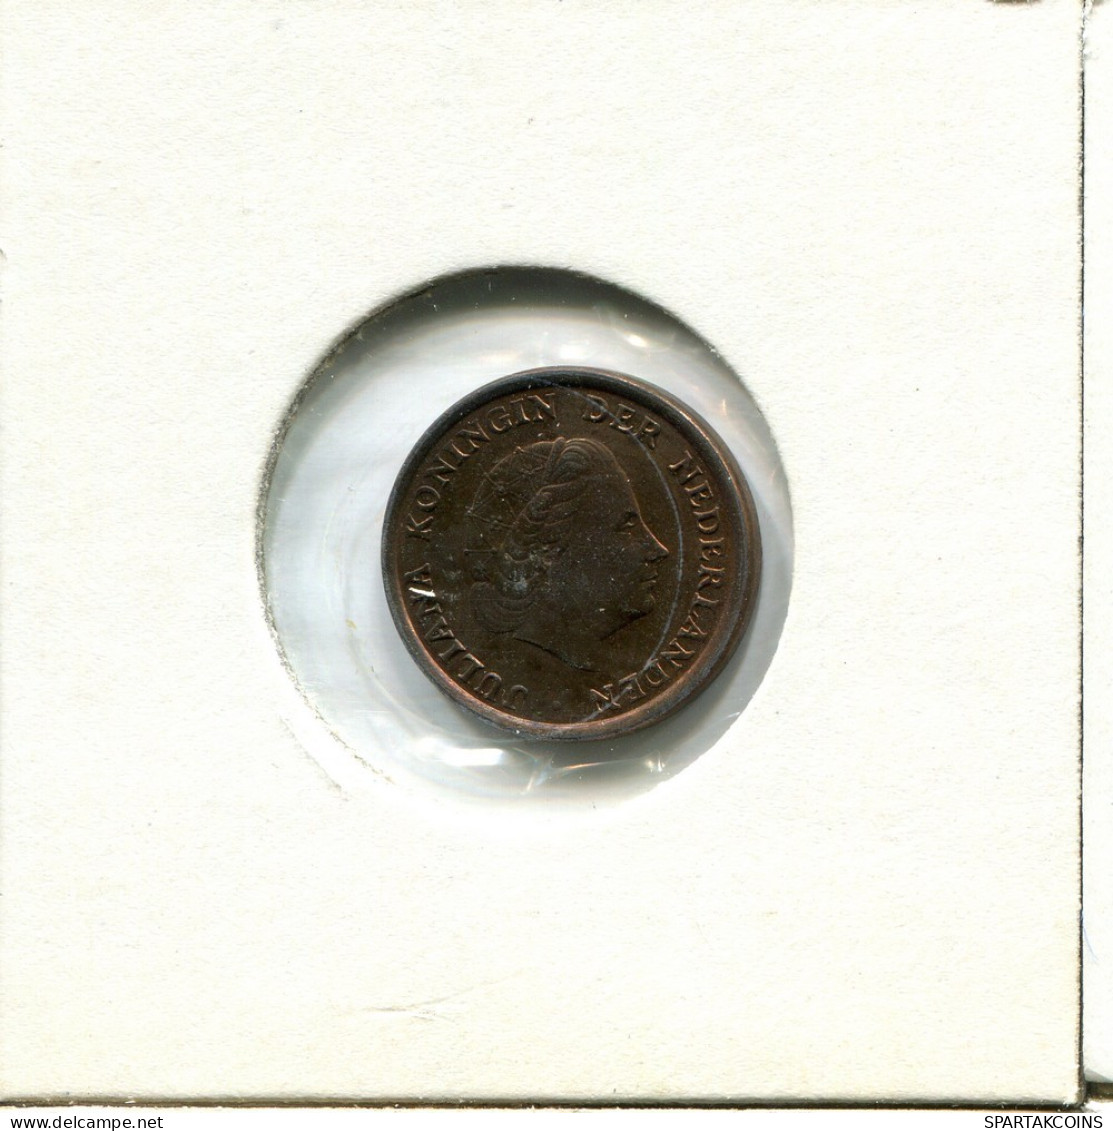 1 CENT 1979 NETHERLANDS Coin #AU447.U.A - 1948-1980: Juliana